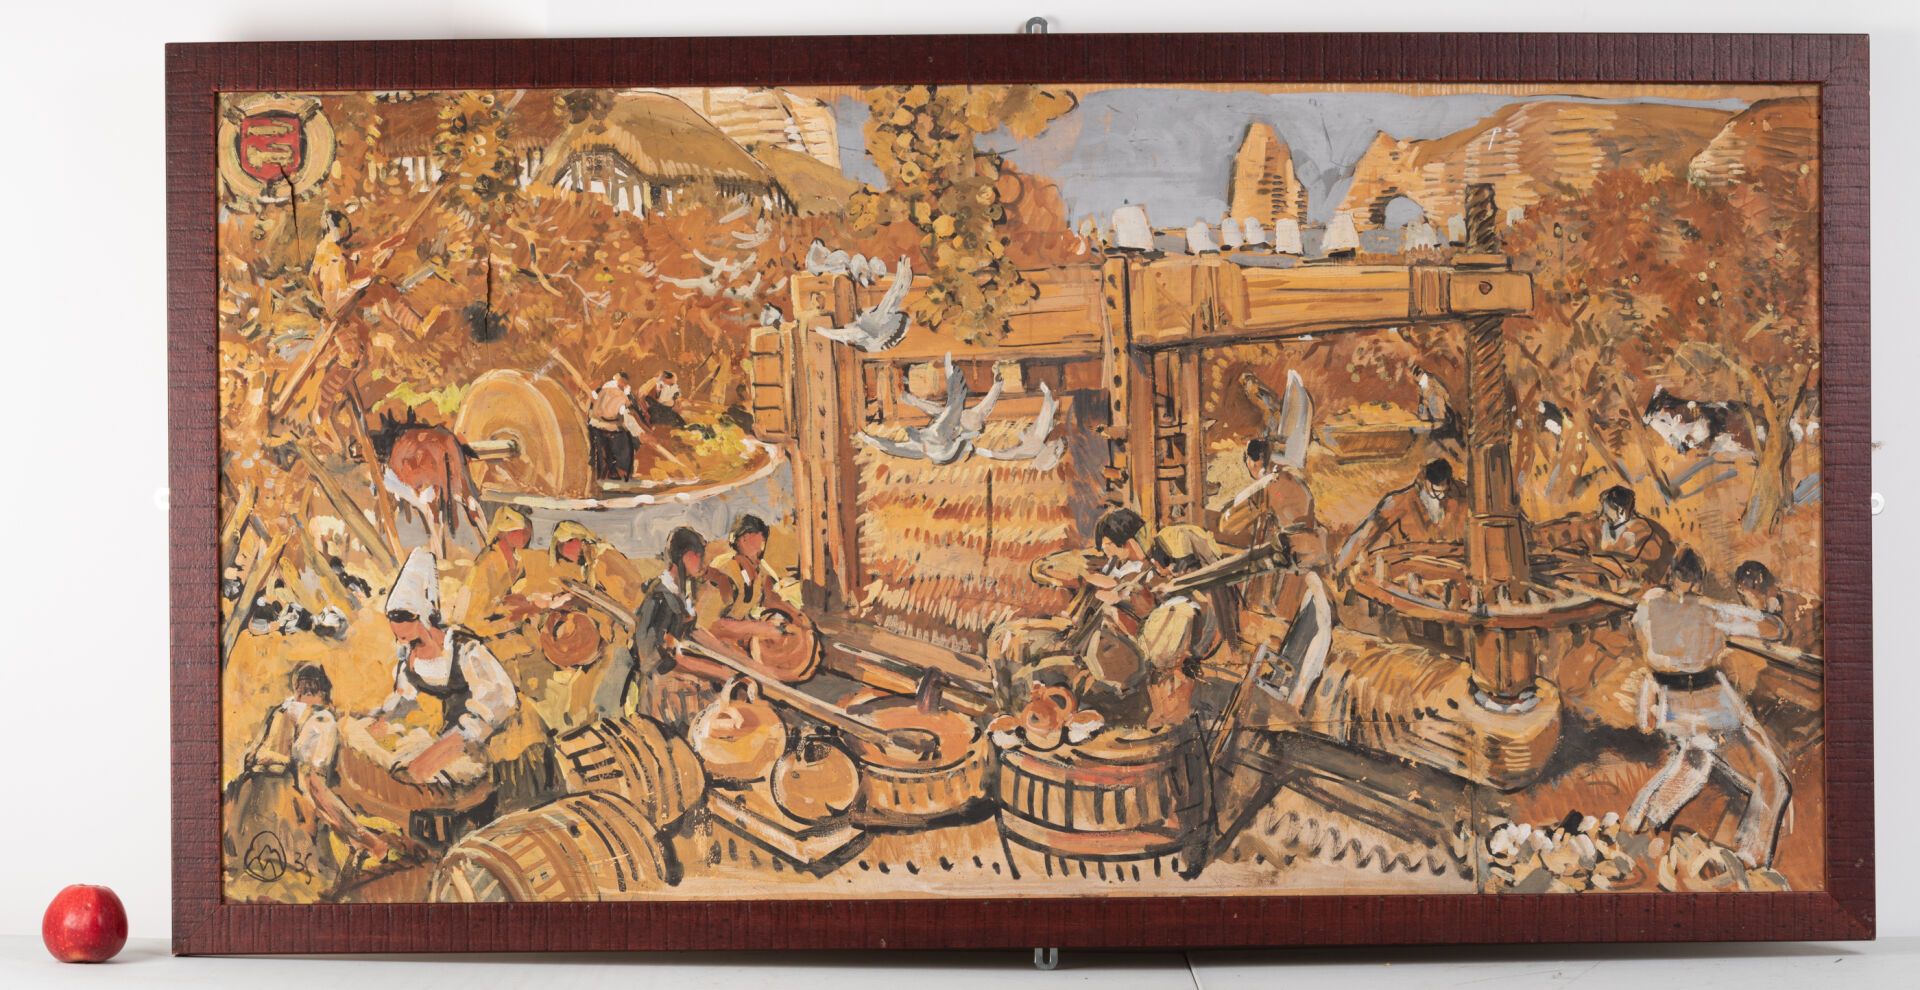 Mathurin MEHEUT (1882-1958) 苹果酒的制作

纸上水粉画

H.71厘米。宽141厘米

左下方有图案和日期(19(35))

撕裂，&hellip;